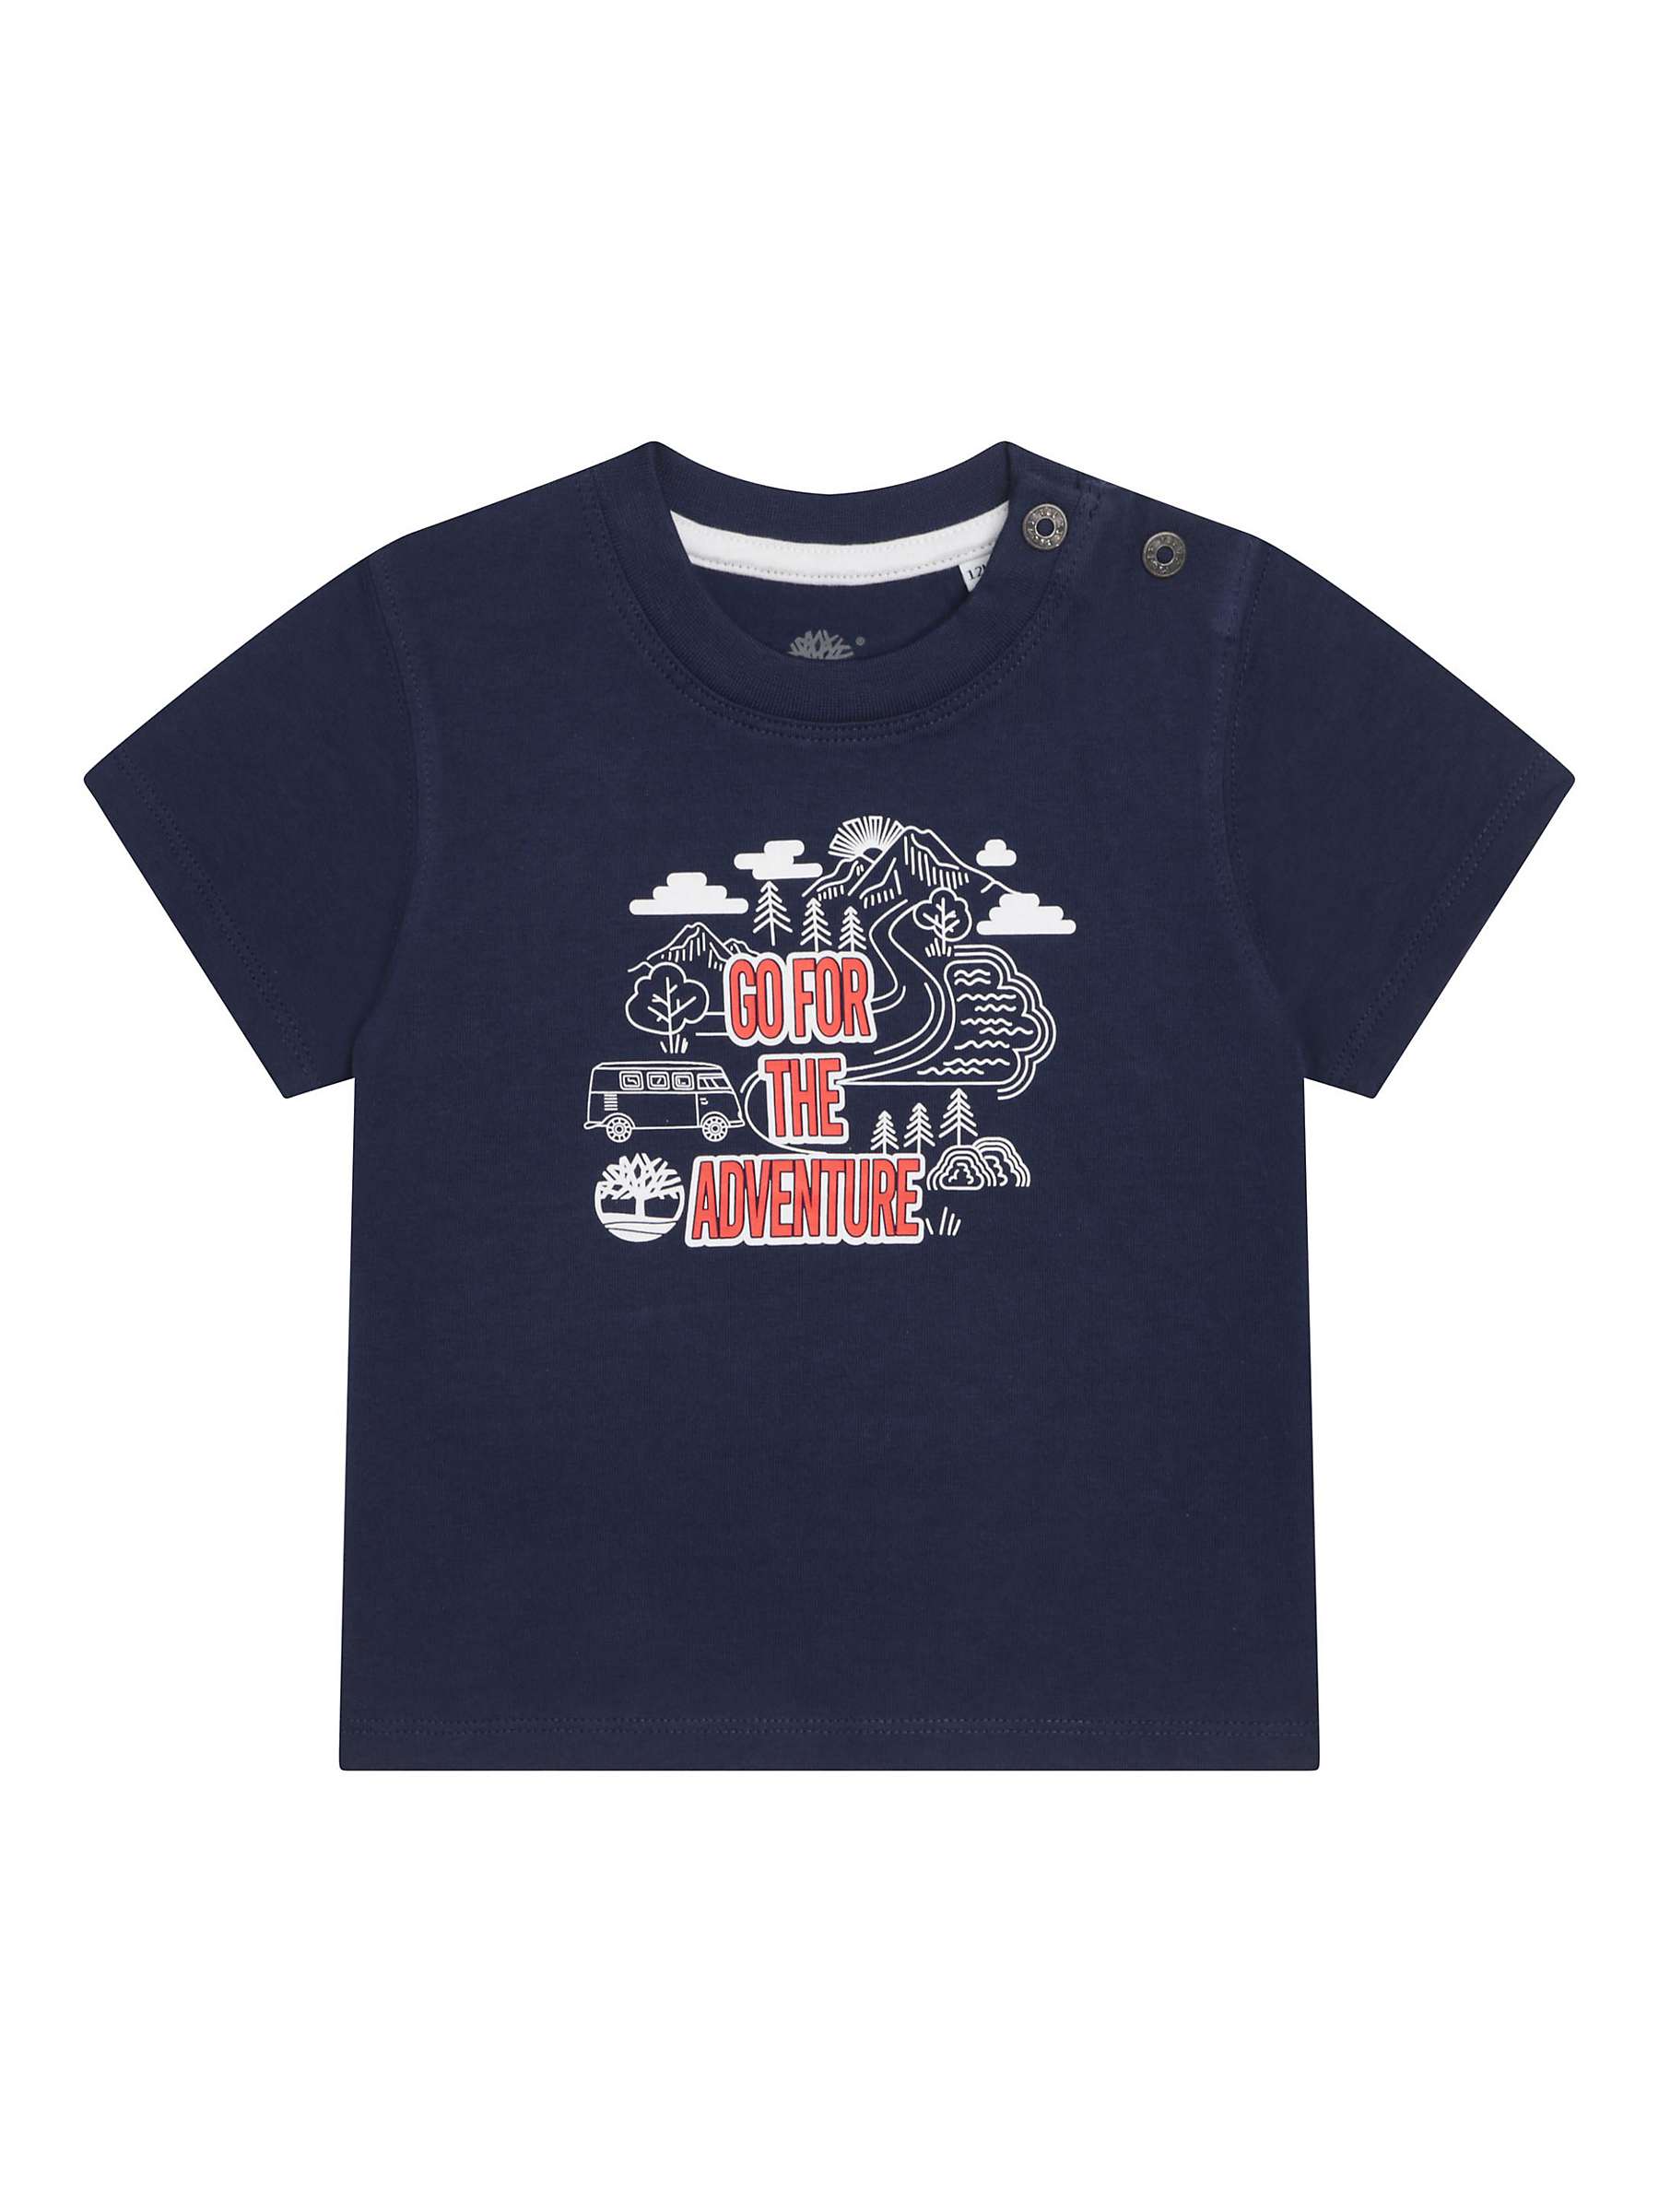 Buy Timberland Kids' Short Sleeved T-Shirt, Navy/Multi Online at johnlewis.com